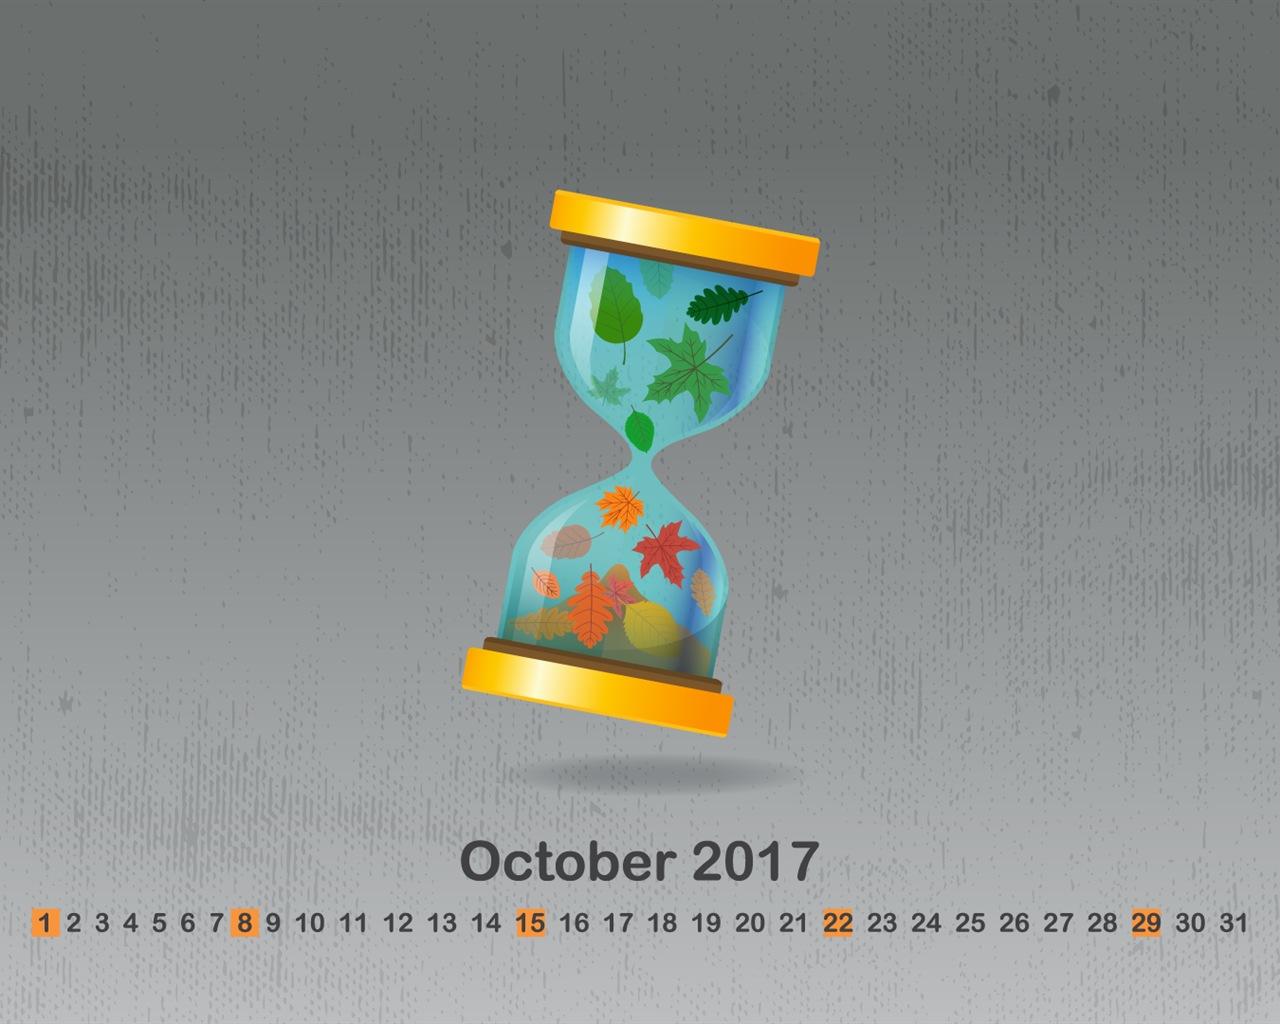 October 2017 calendar wallpaper #9 - 1280x1024